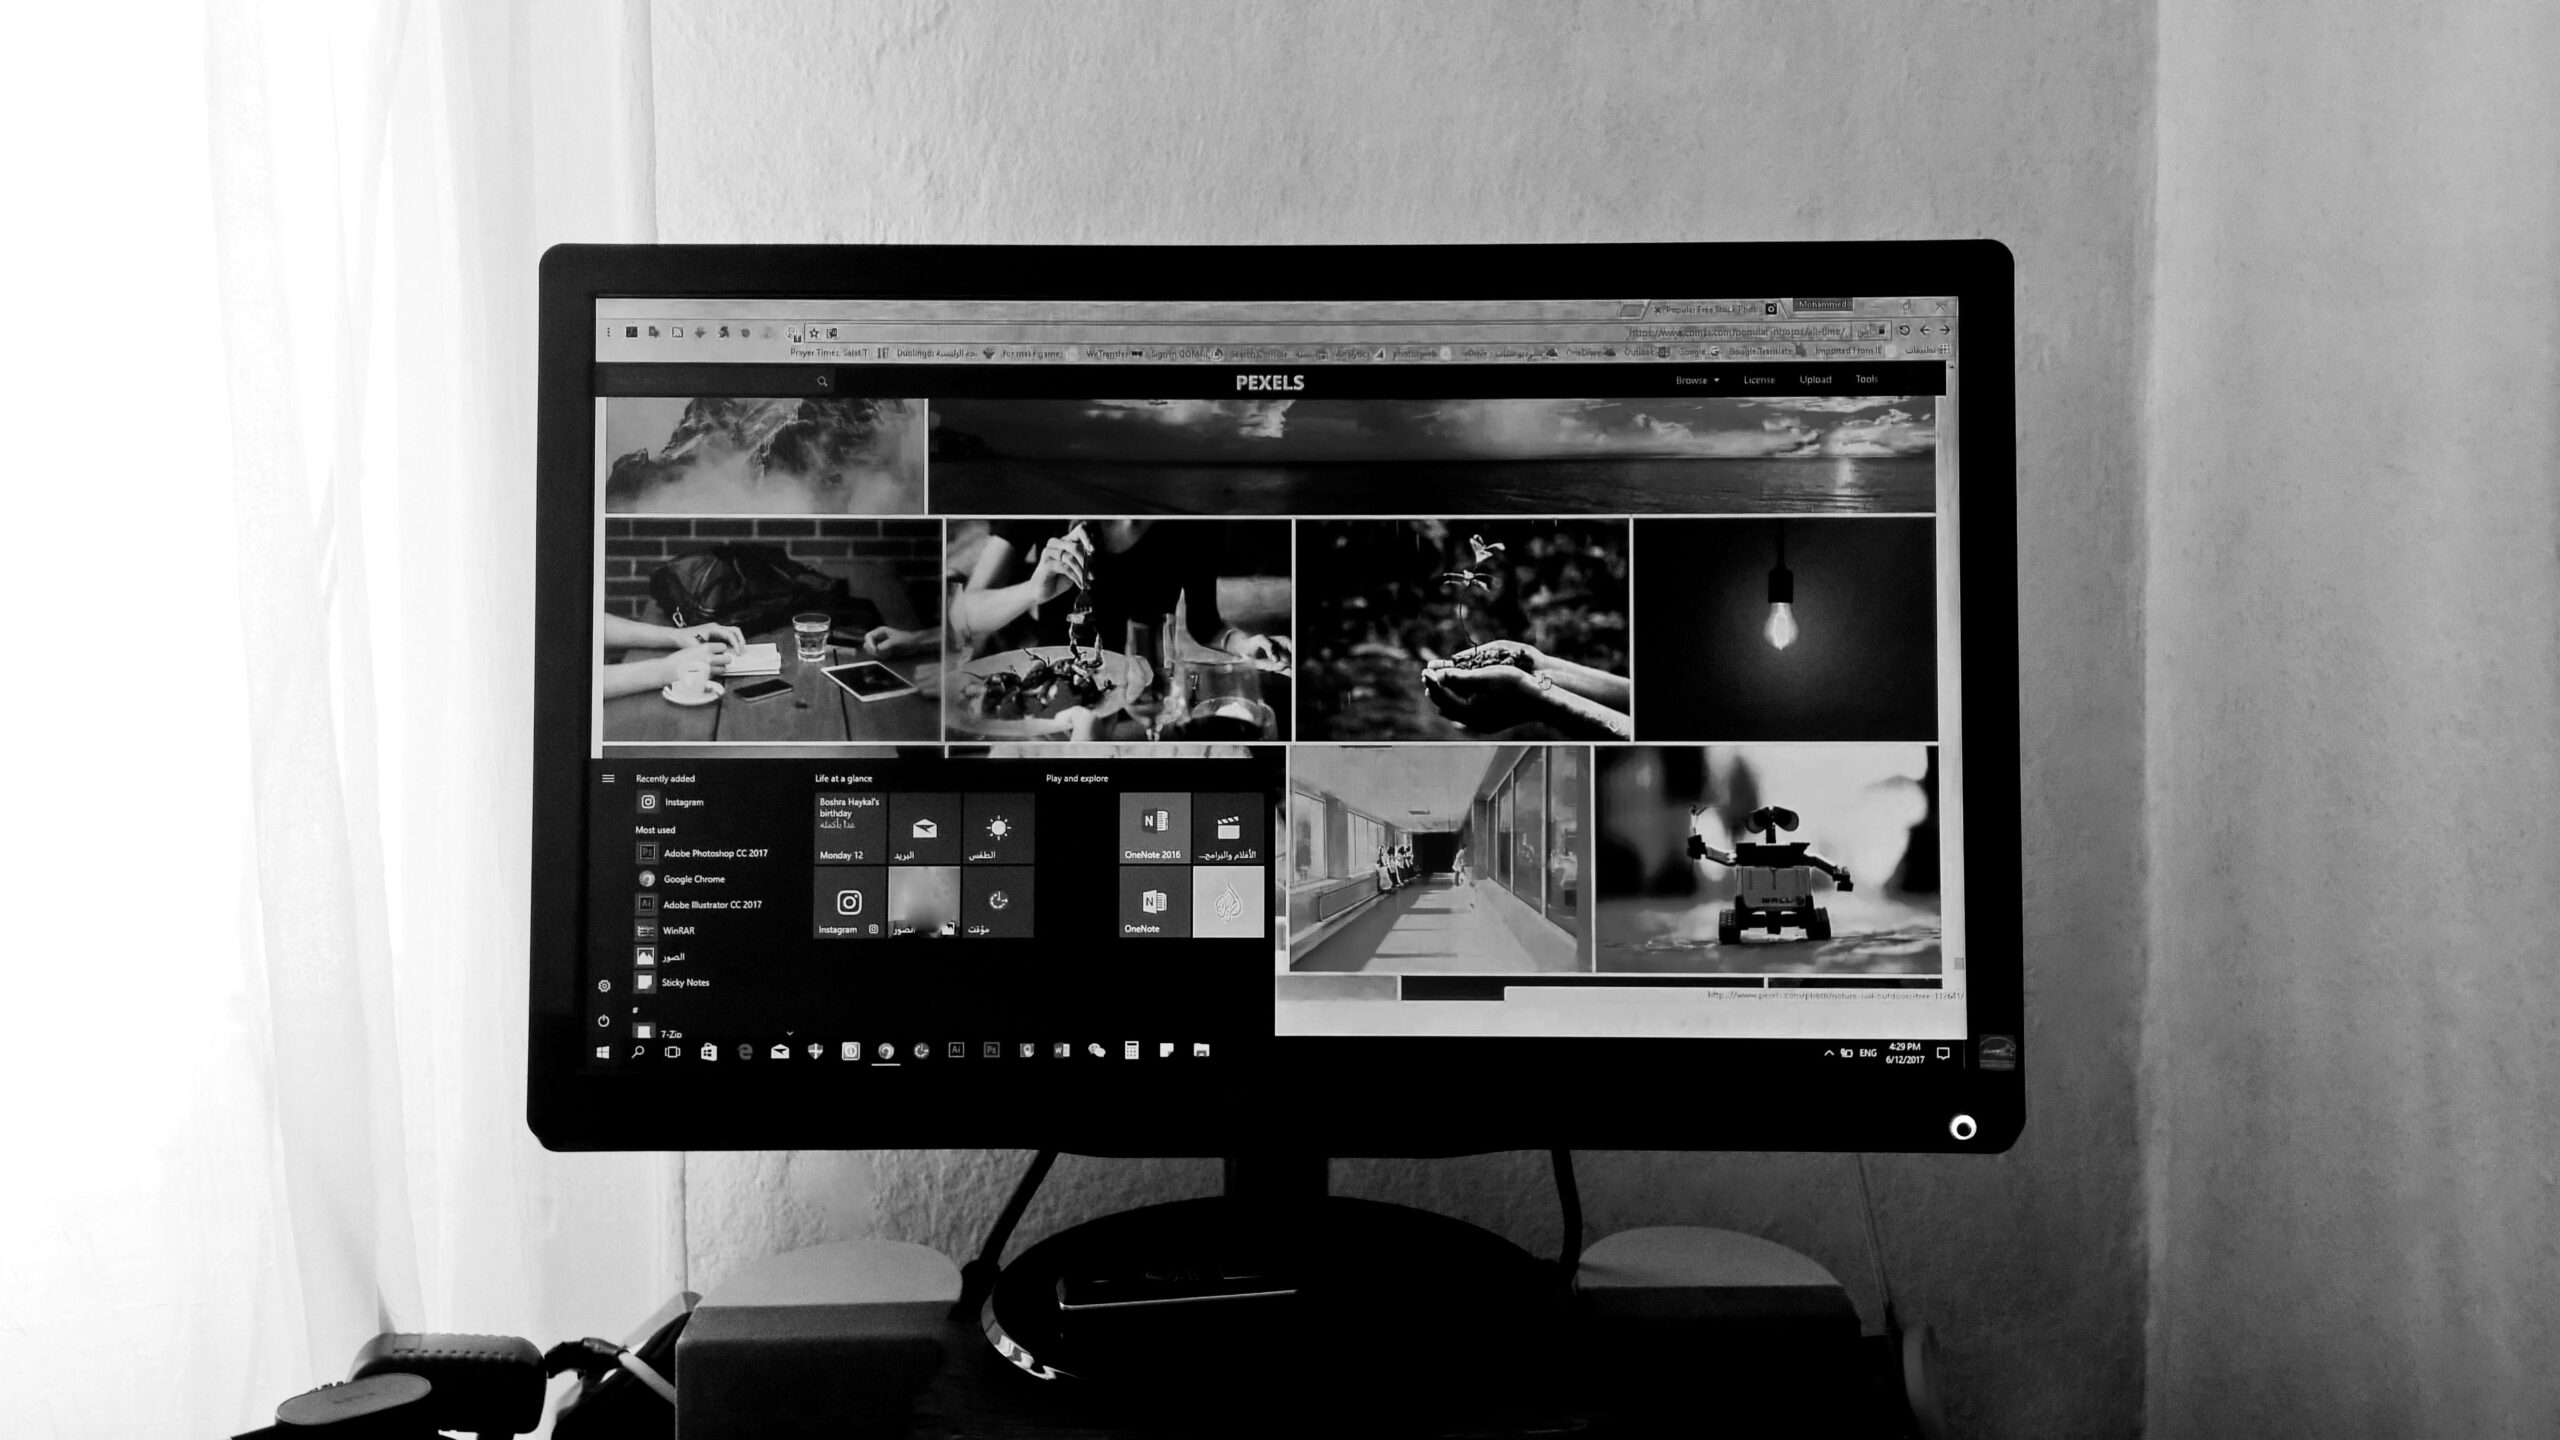 Grayscale Photo of Computer Desktop